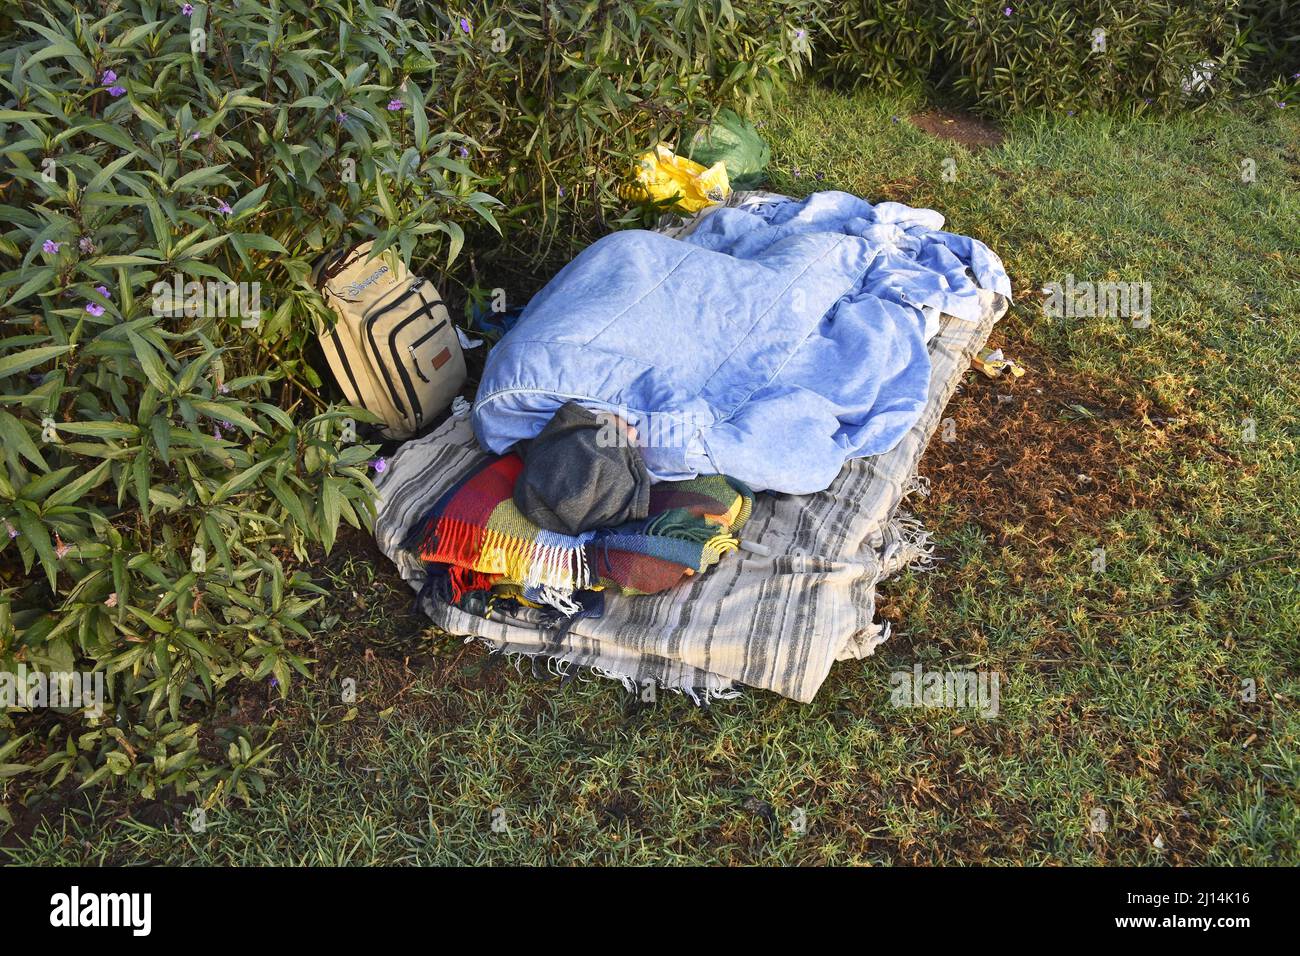 Homeless person sleeping on the ground in park, Las Palmas Gran Canaria Spain. Stock Photo